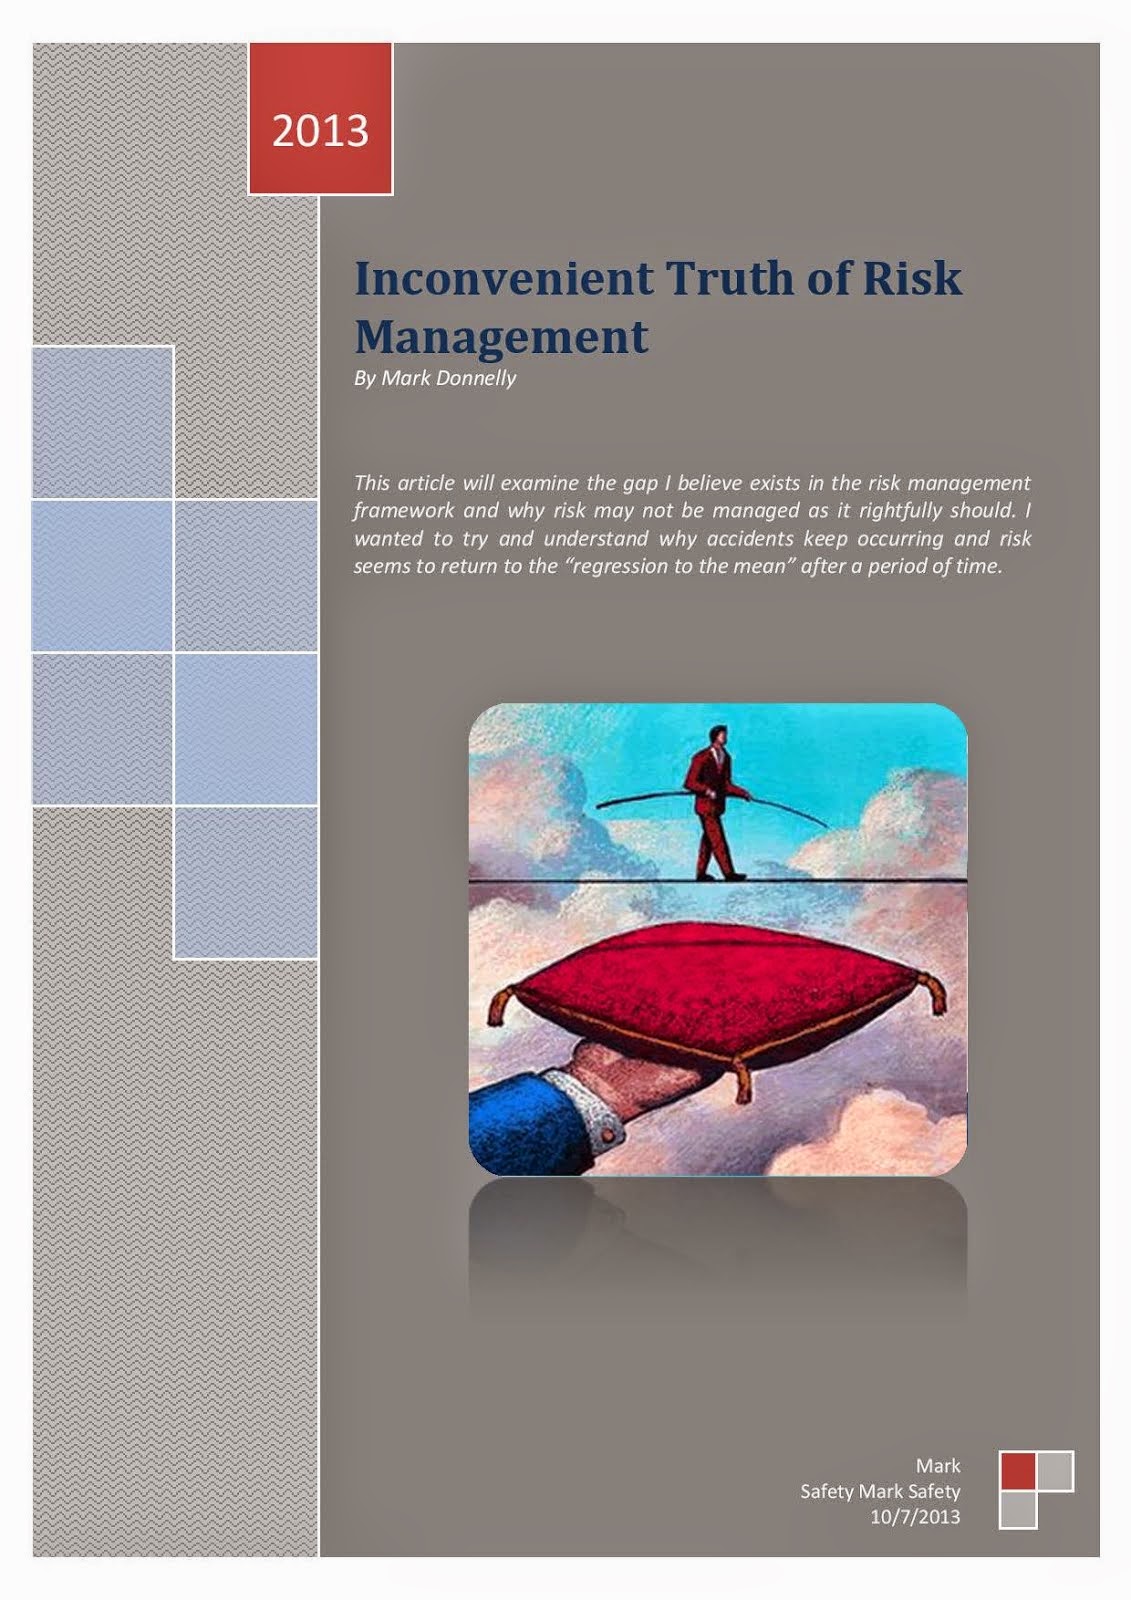 Inconvenient truth of Risk Management